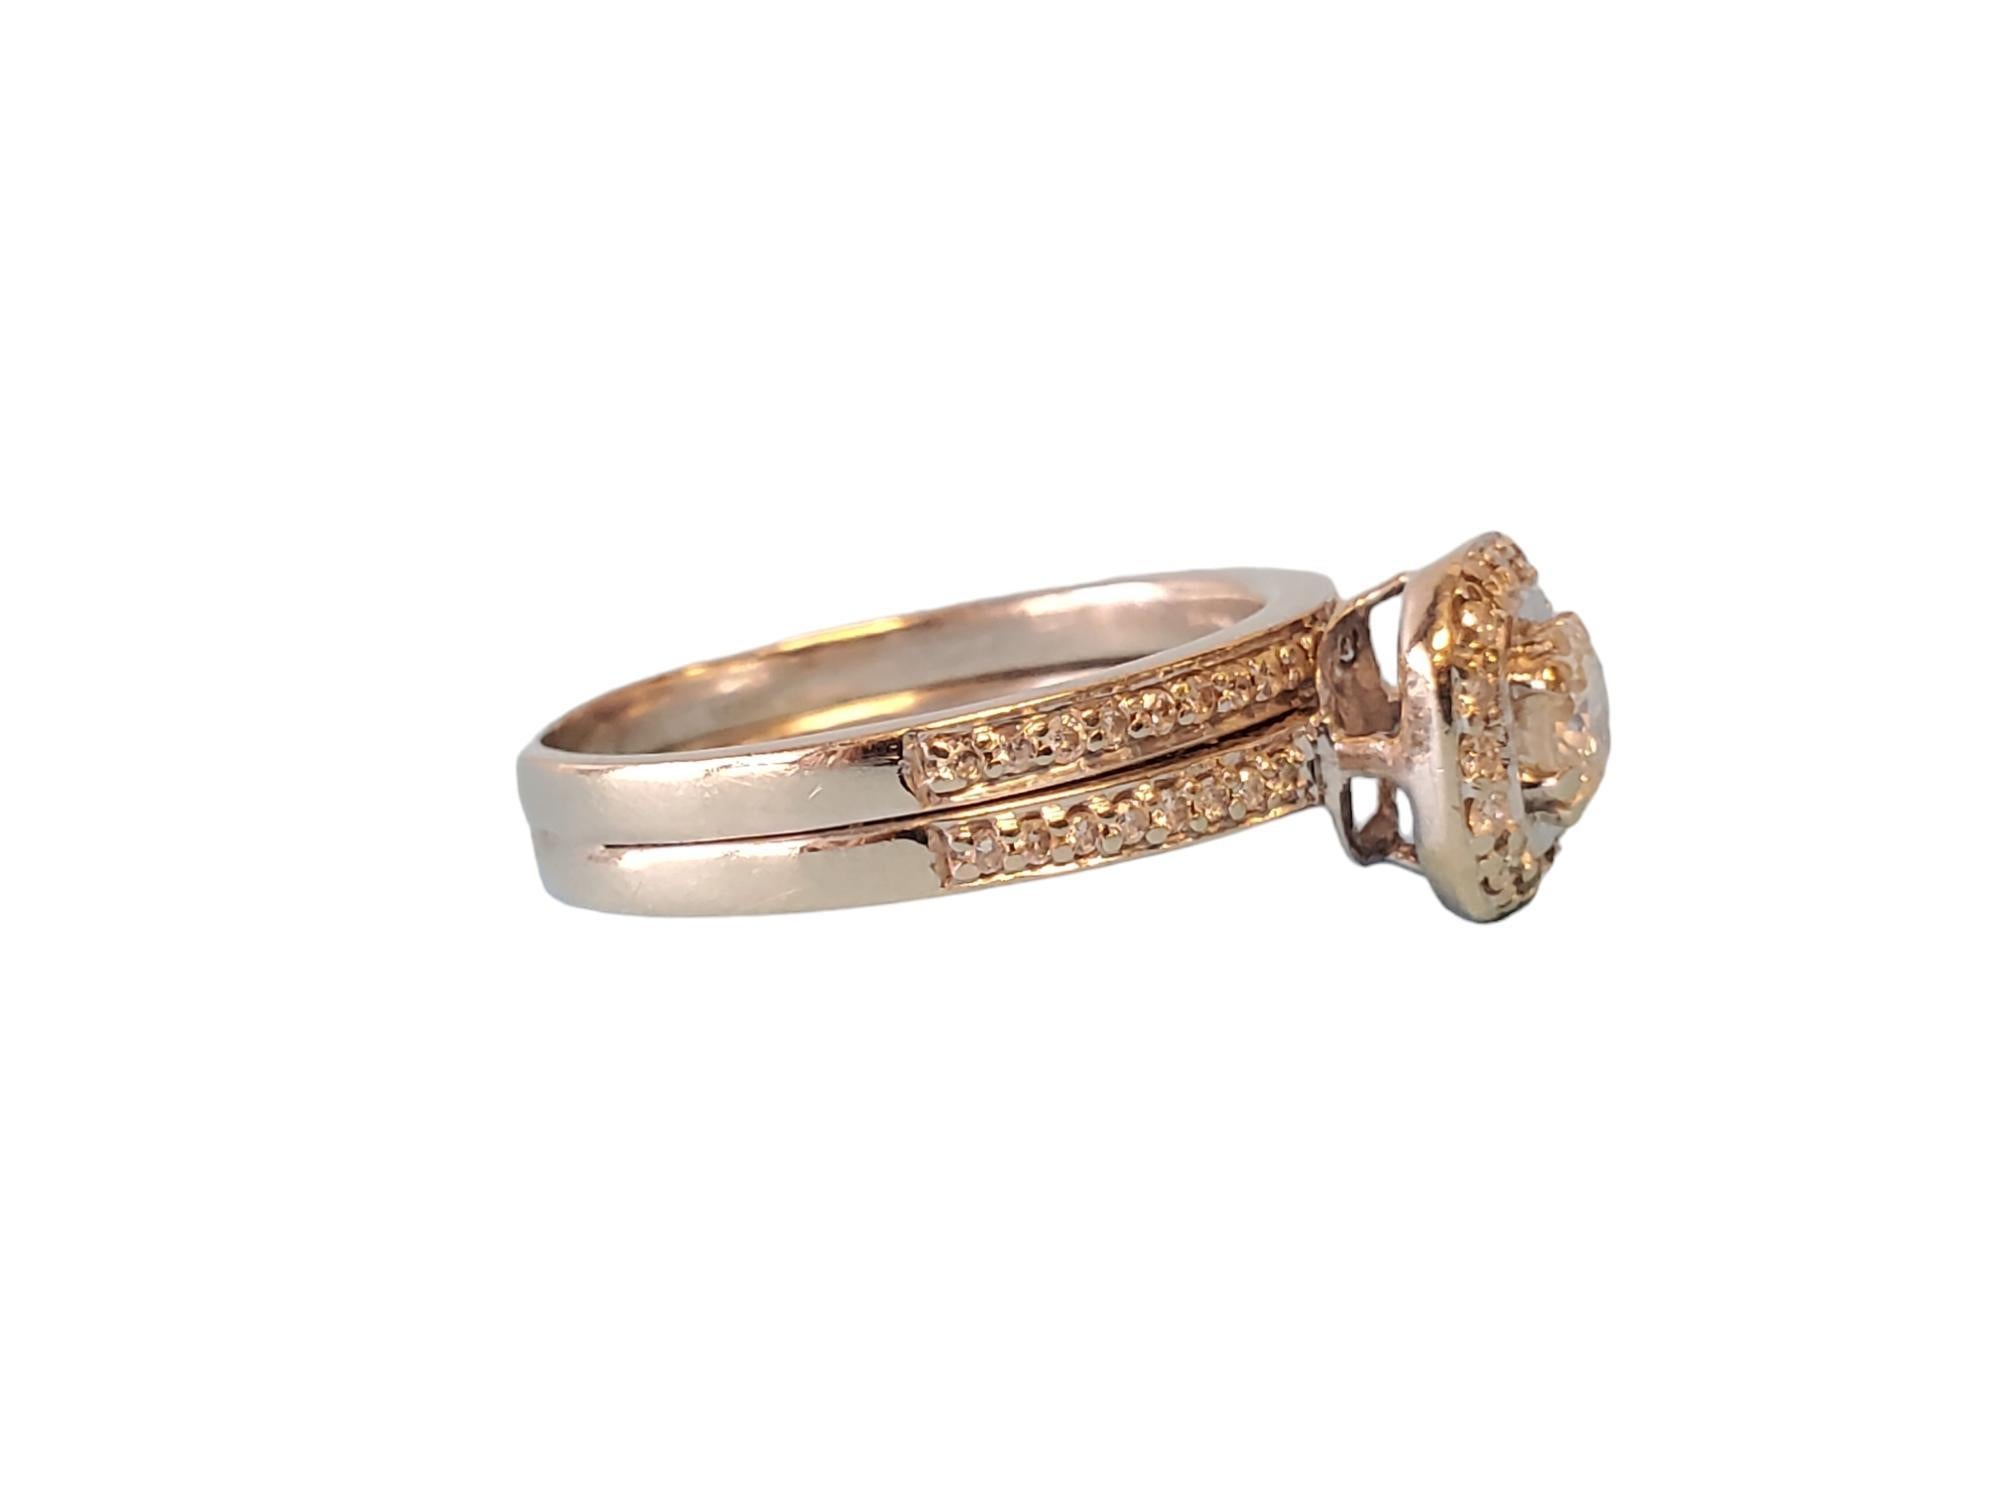 Brilliant Cut Diamond Engagement Ring 14k White Gold .42ct Round Brilliant Center Stone, 1tcw For Sale